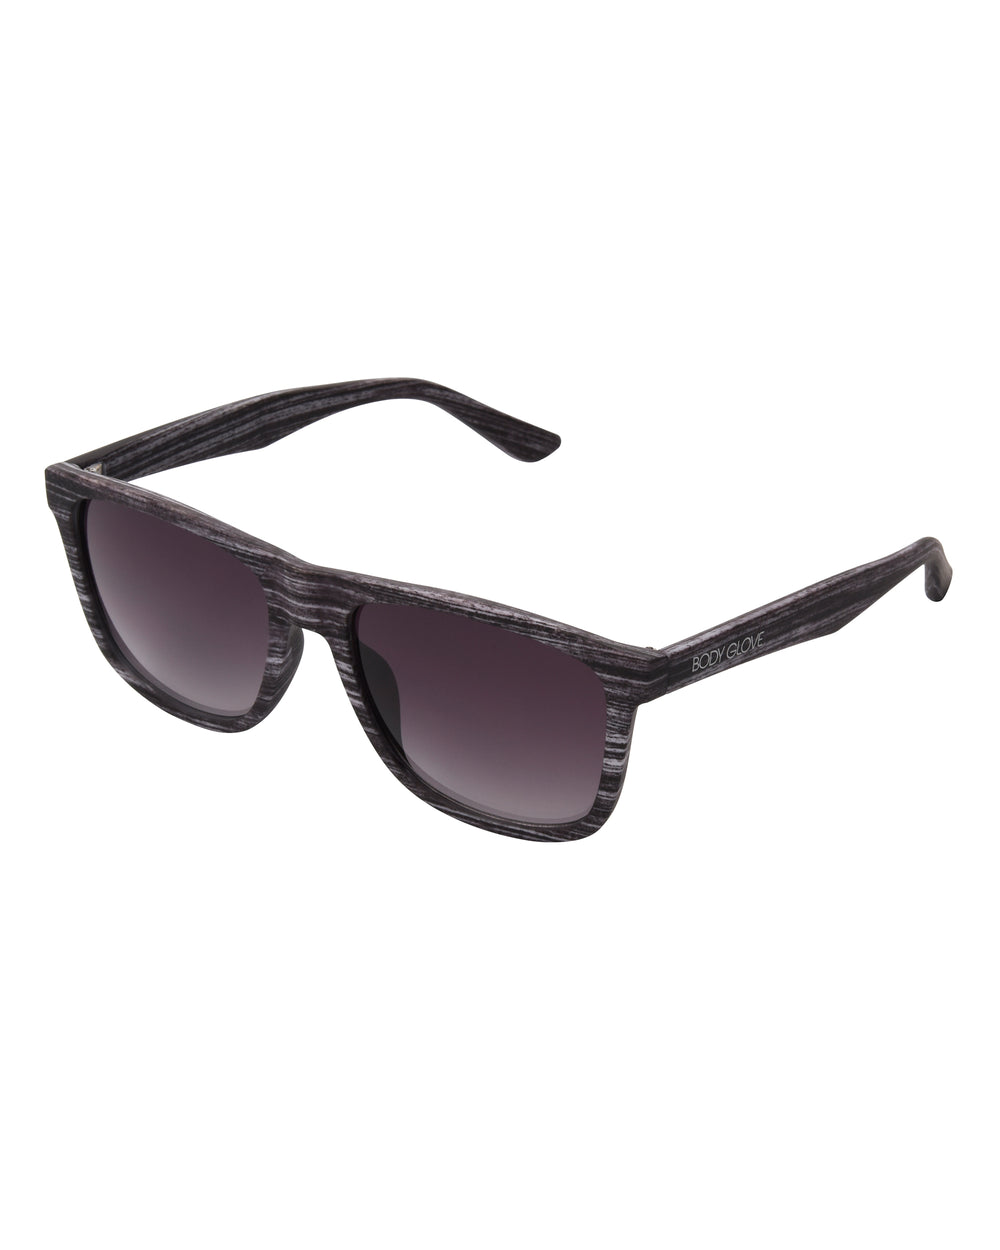 Body Glove BGM 2208 Sunglasses Black Wood Frame 10261082.LTS